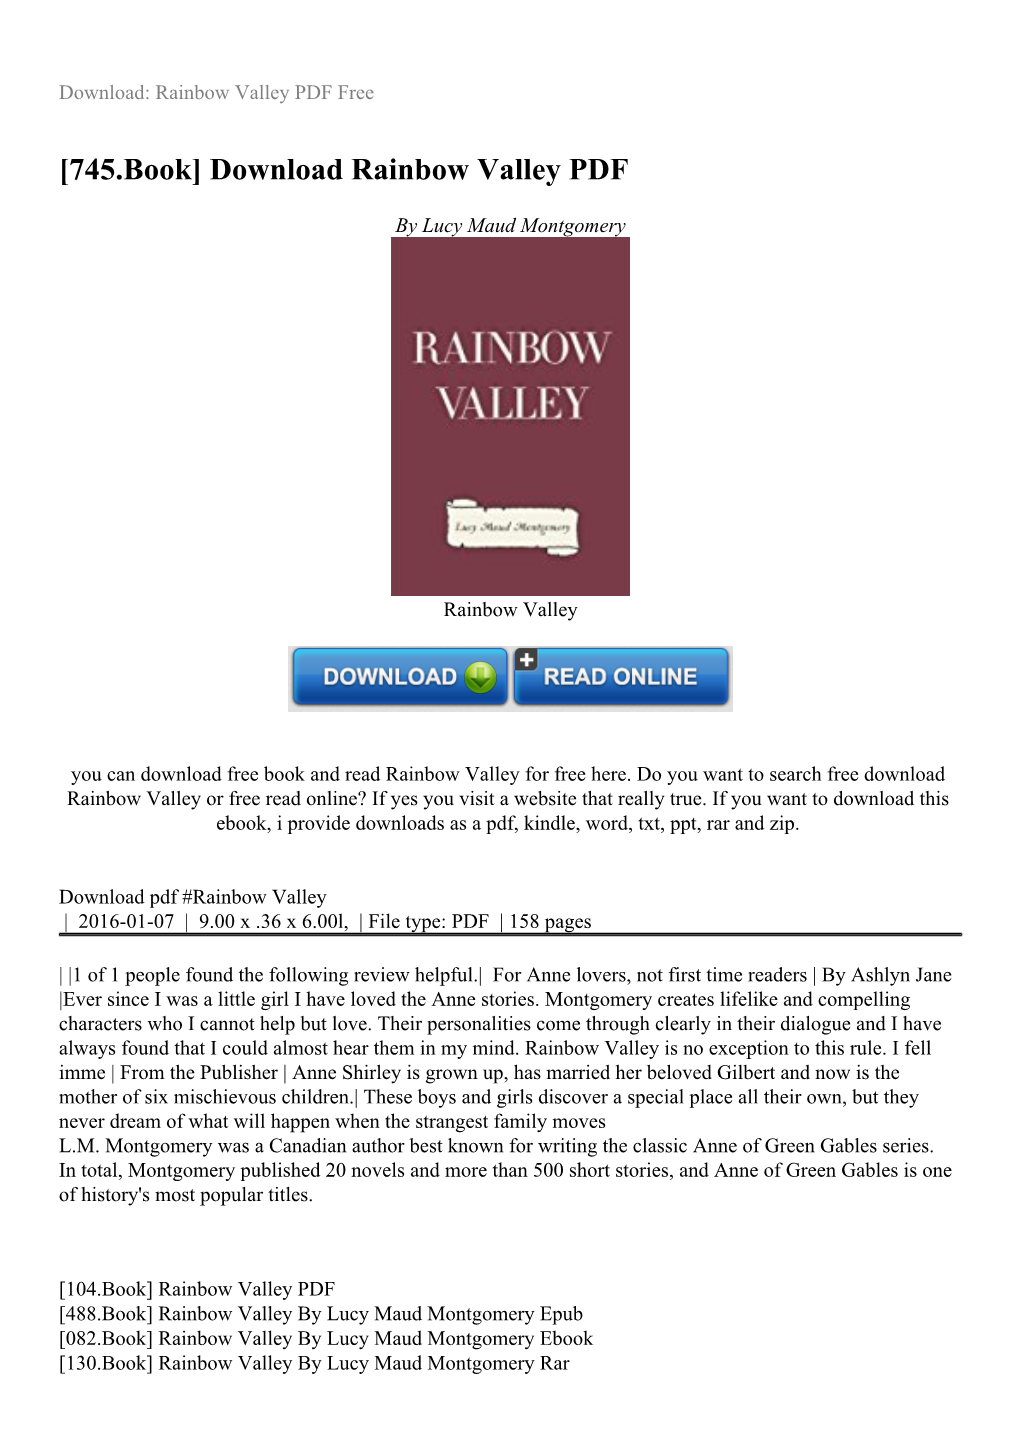 Download Rainbow Valley PDF